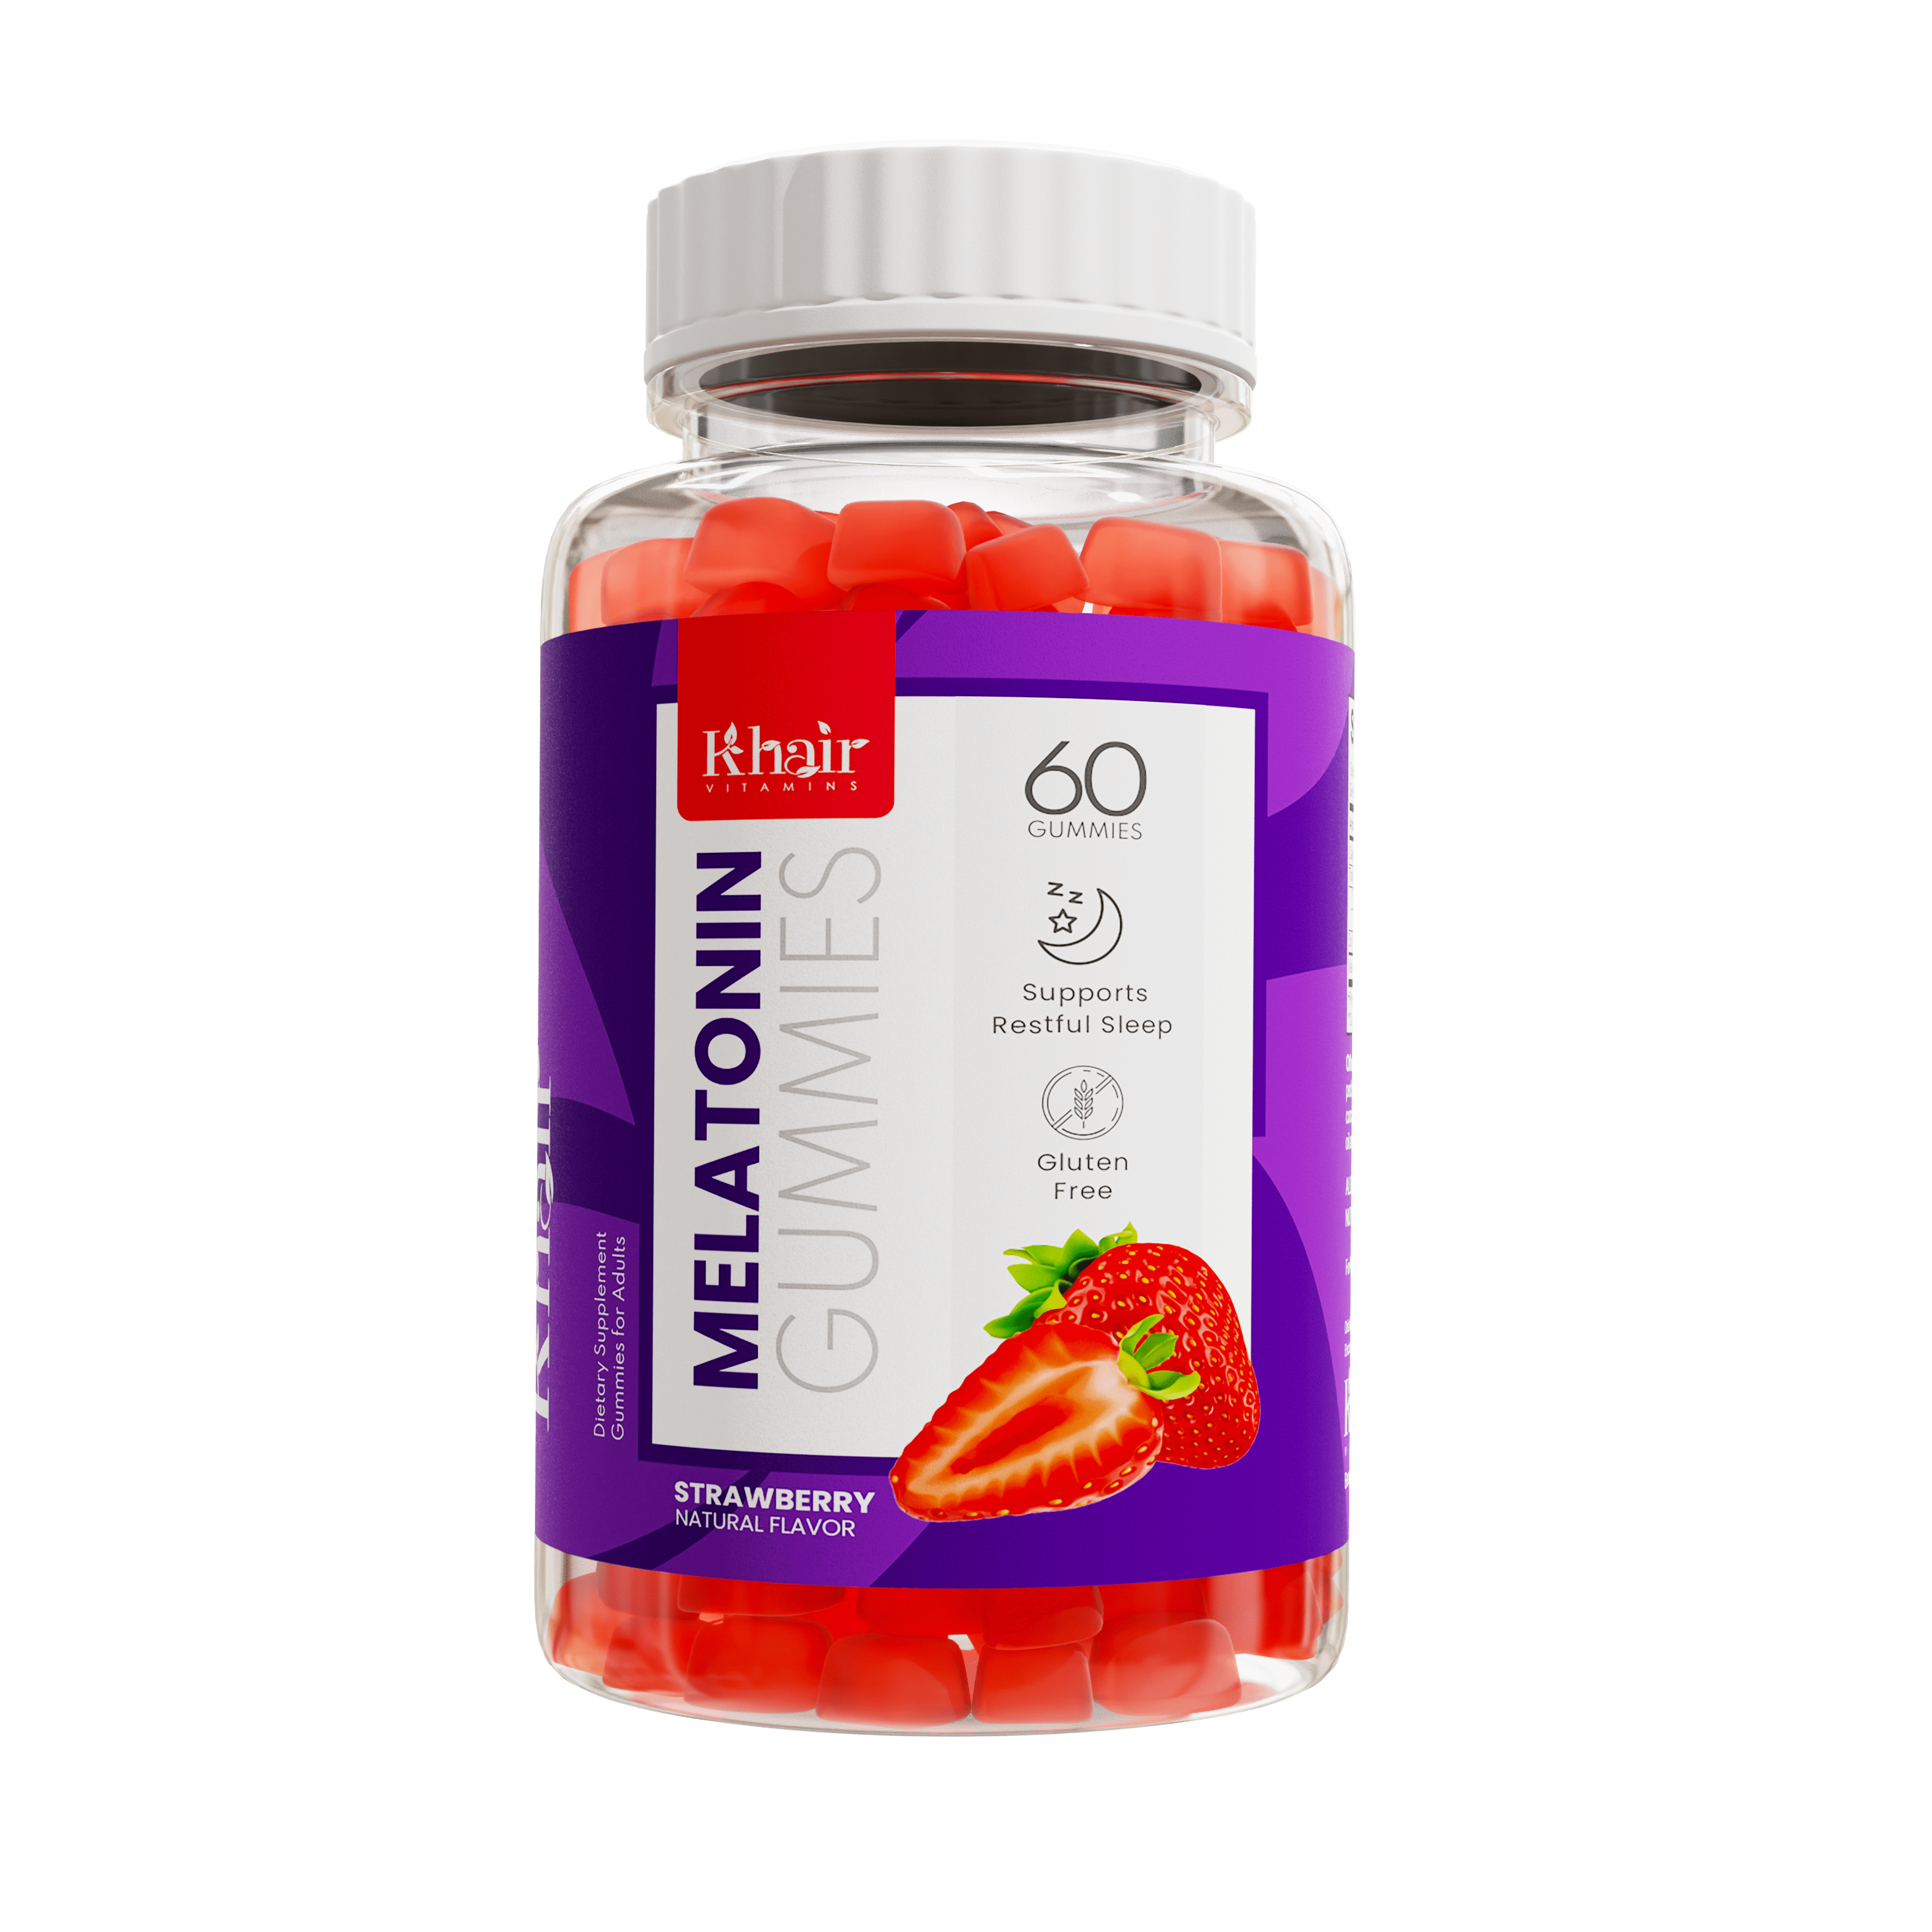  Melatonin summer supplement: A bottle of melatonin gummies, a popular sleep aid.